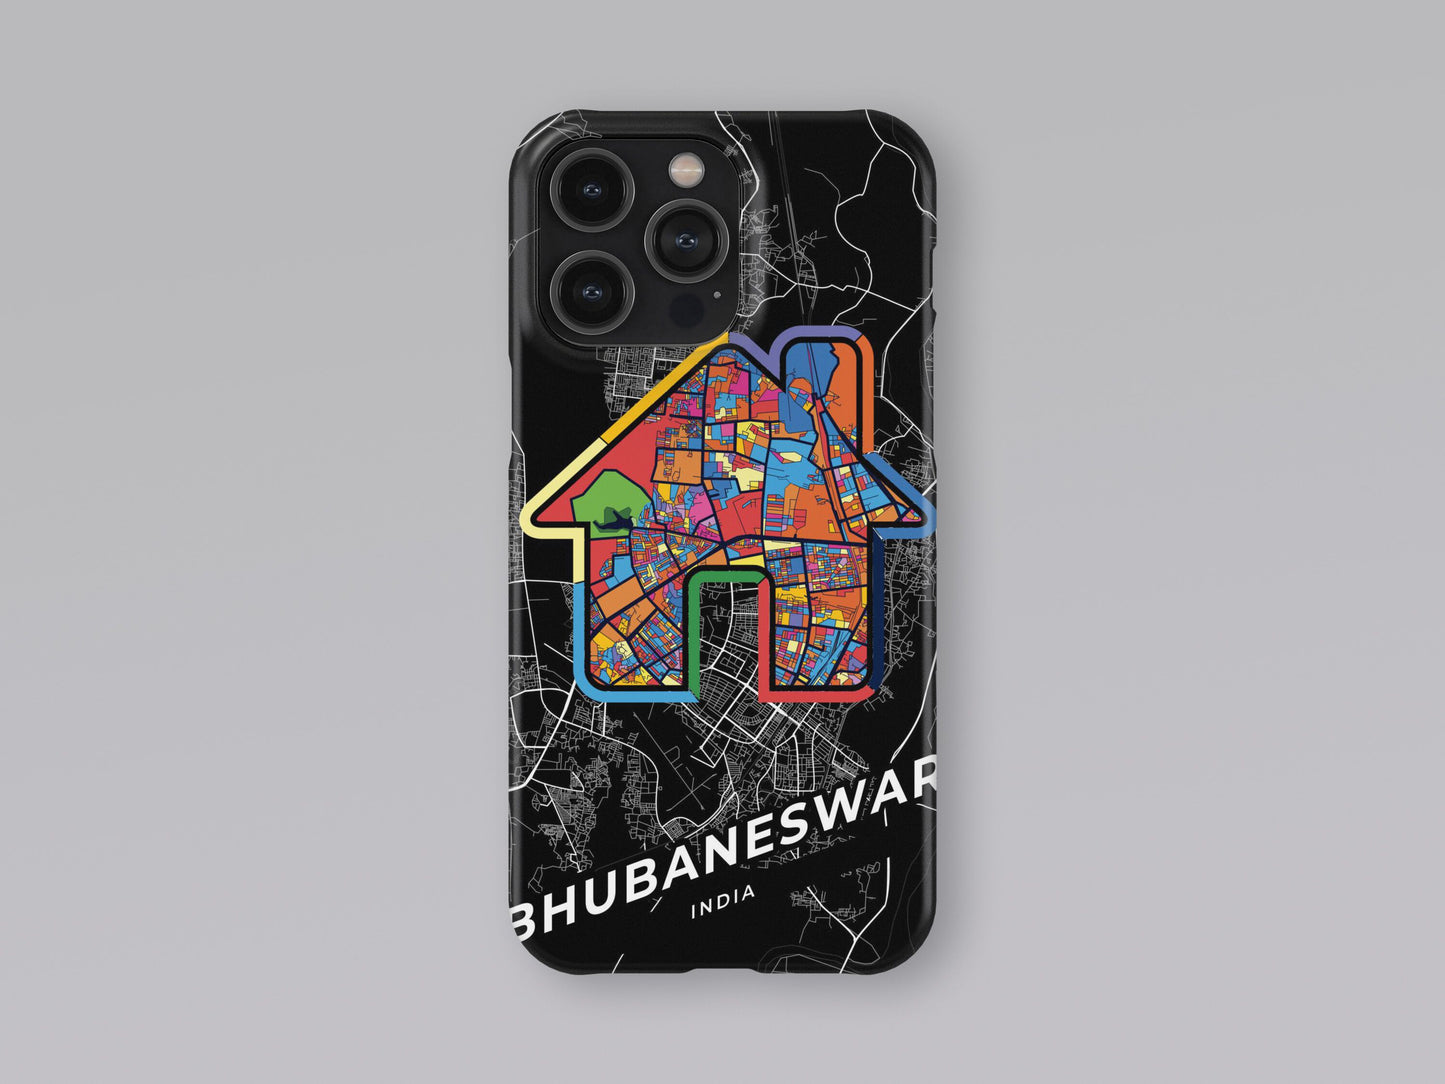 Bhubaneswar India slim phone case with colorful icon. Birthday, wedding or housewarming gift. Couple match cases. 3